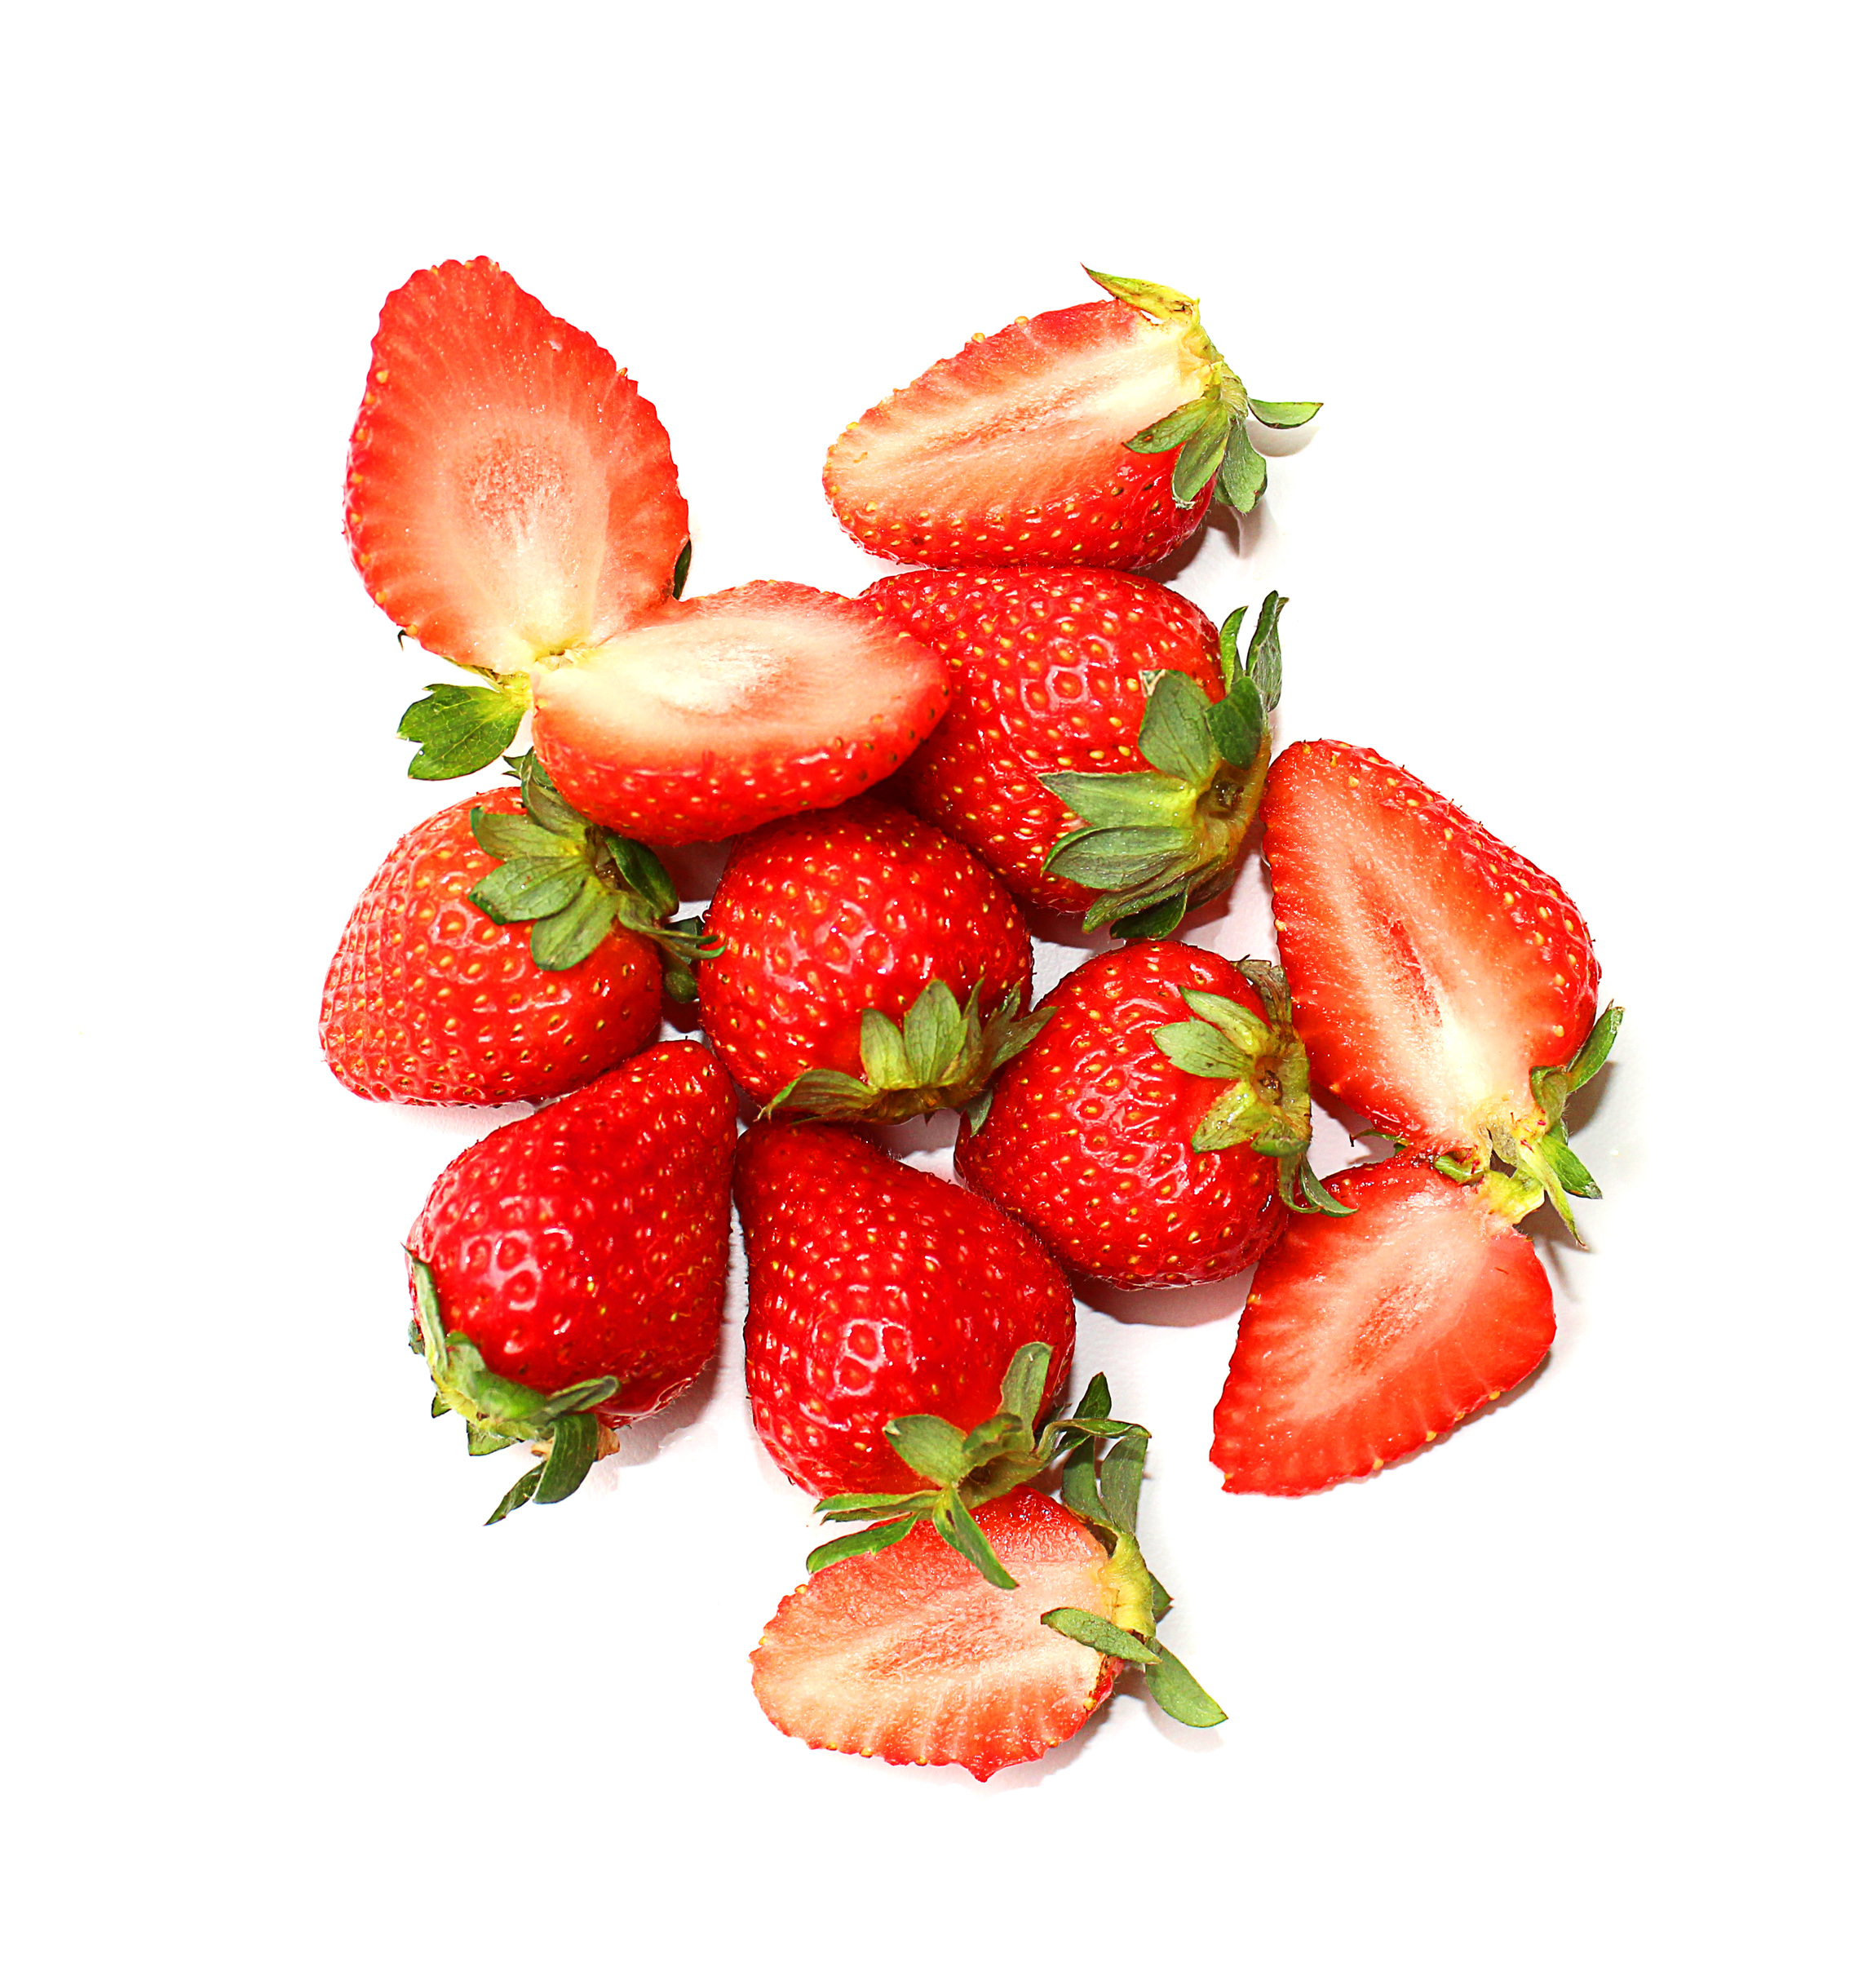 Strawberry fruits on white photo